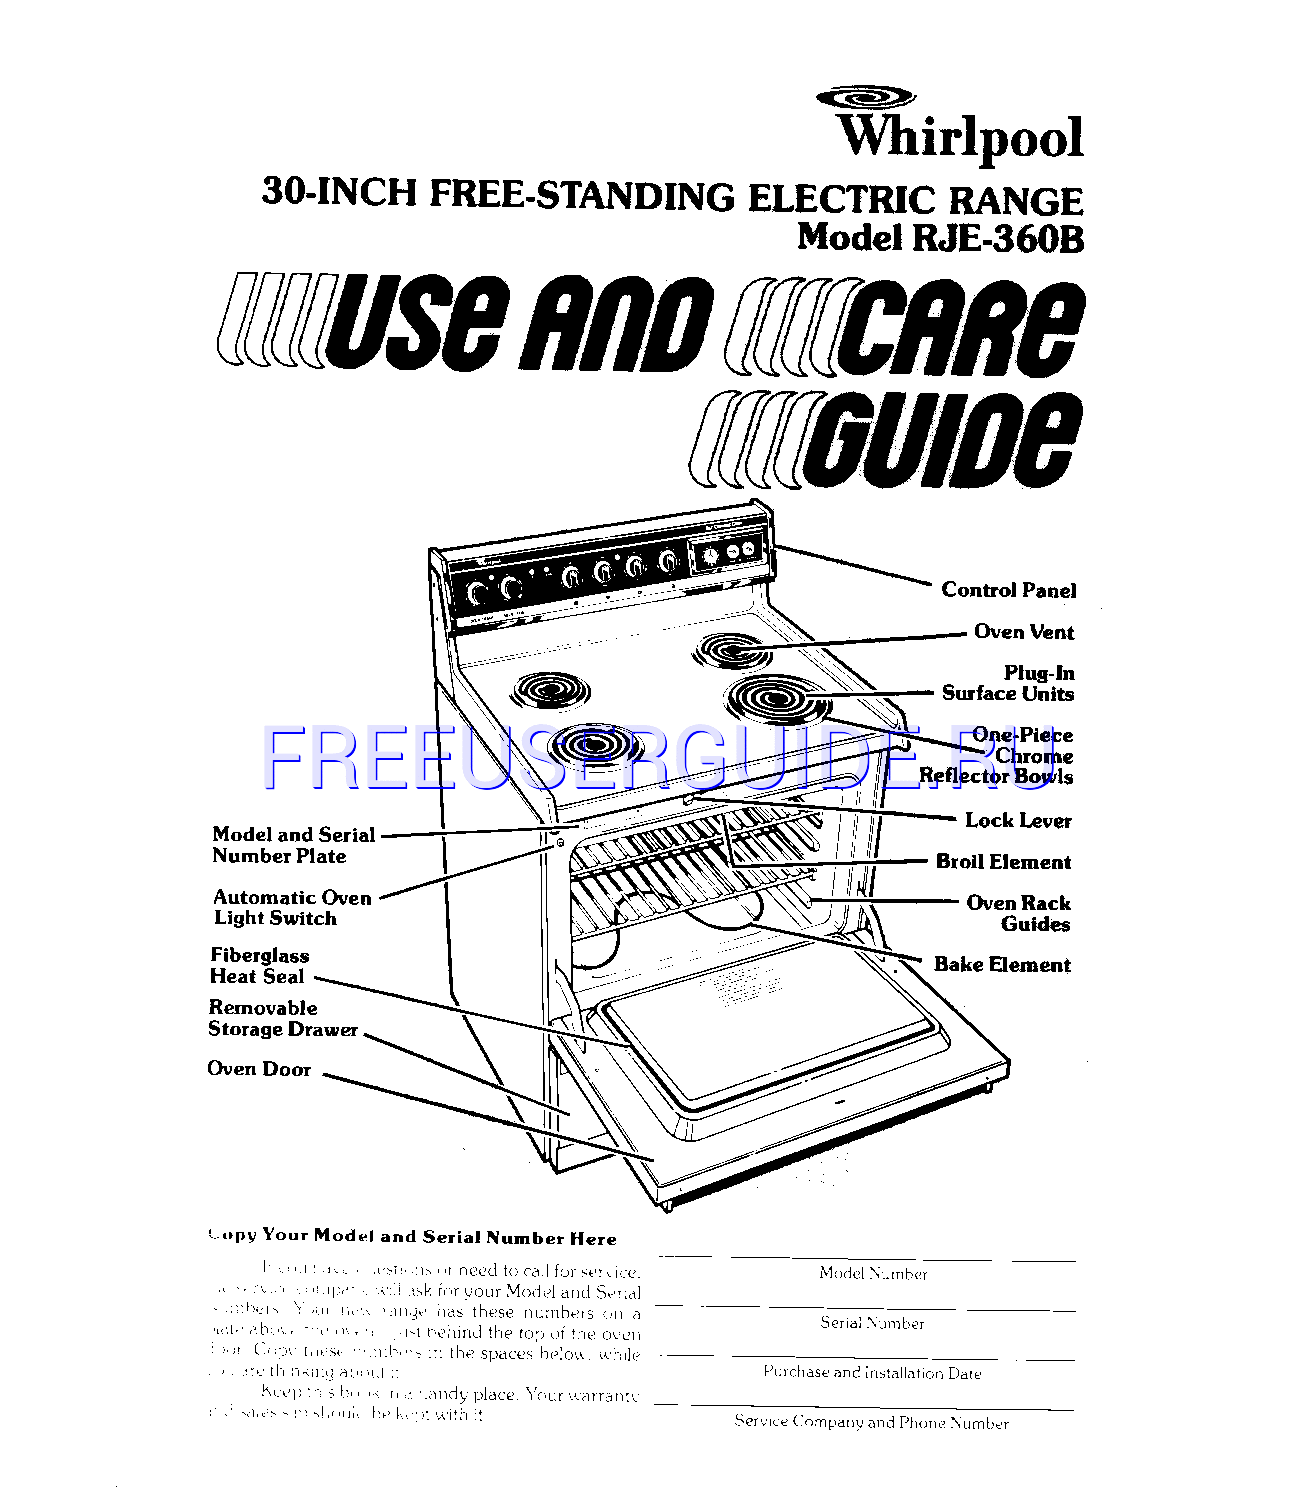 Leer online Manual de usuario para Whirlpool RIE360B (Page 1)